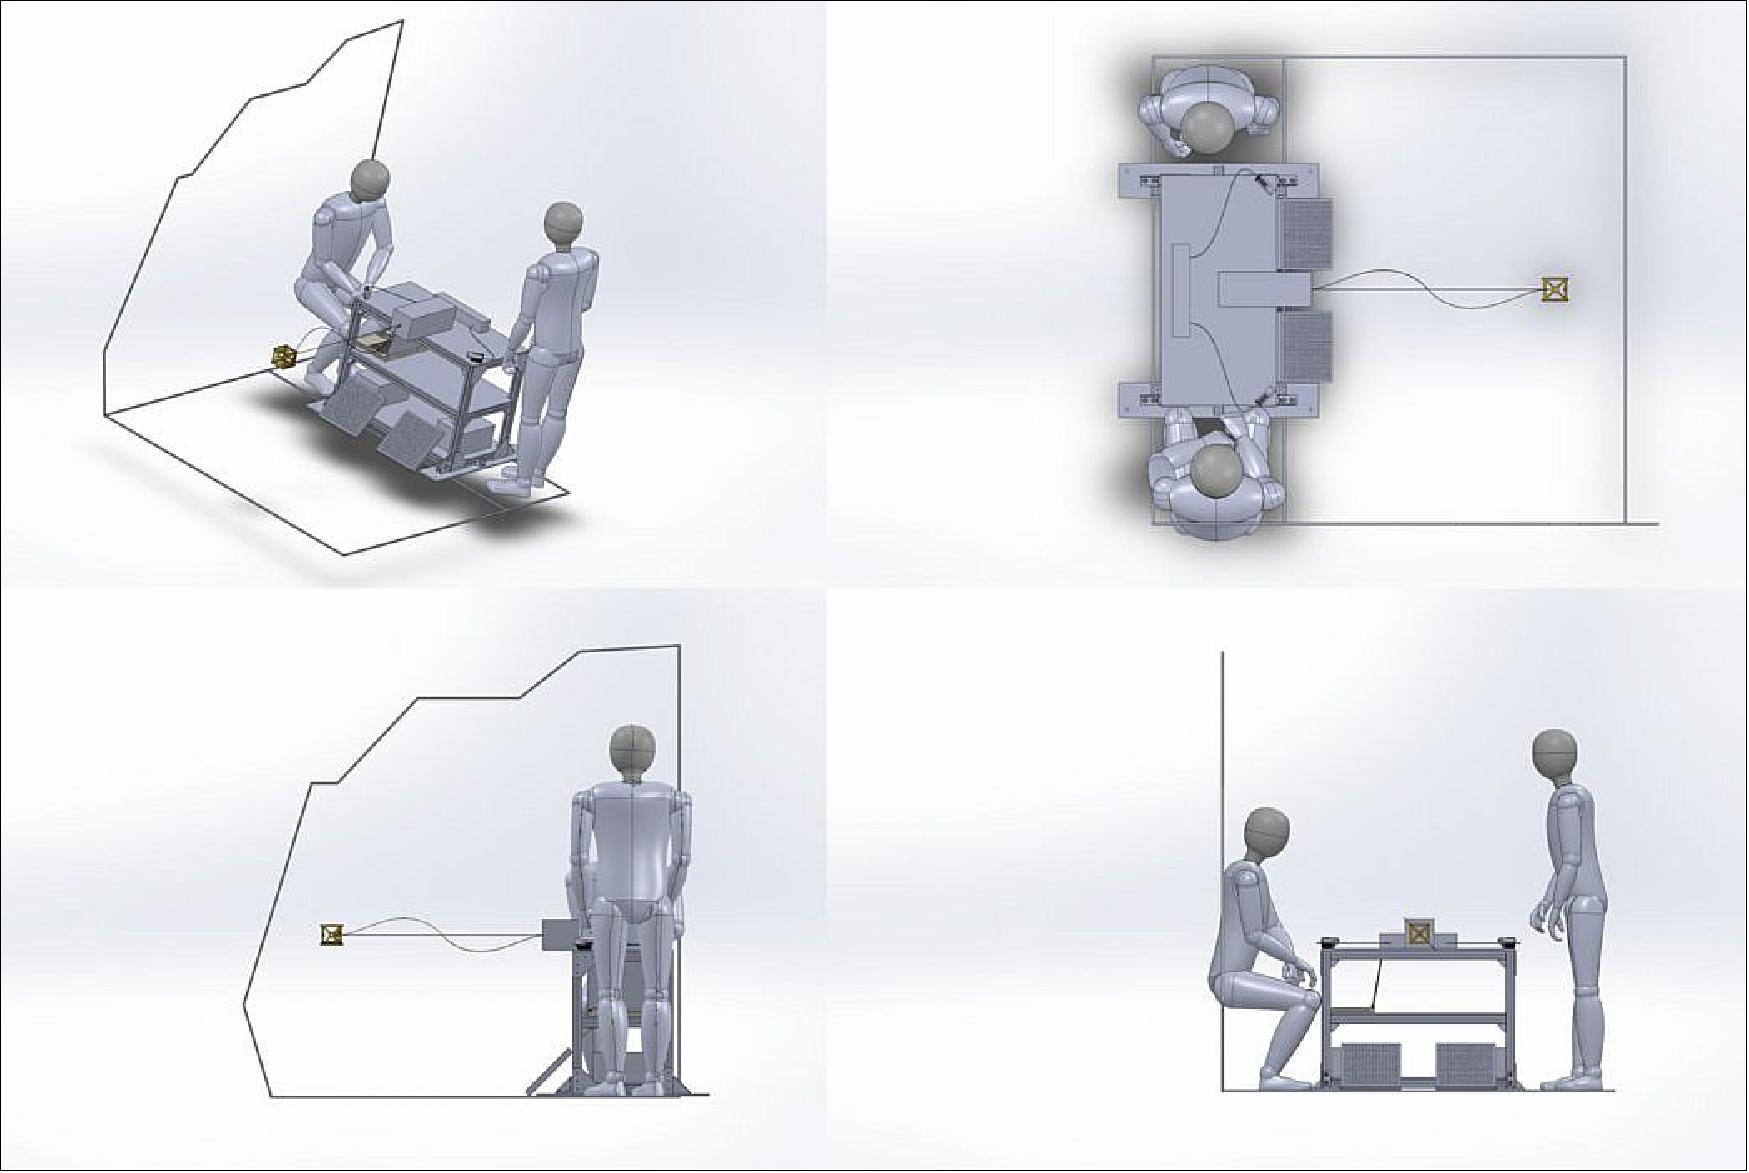 Figure 31: Depiction of the experiment set up (image credit: Politethers team)